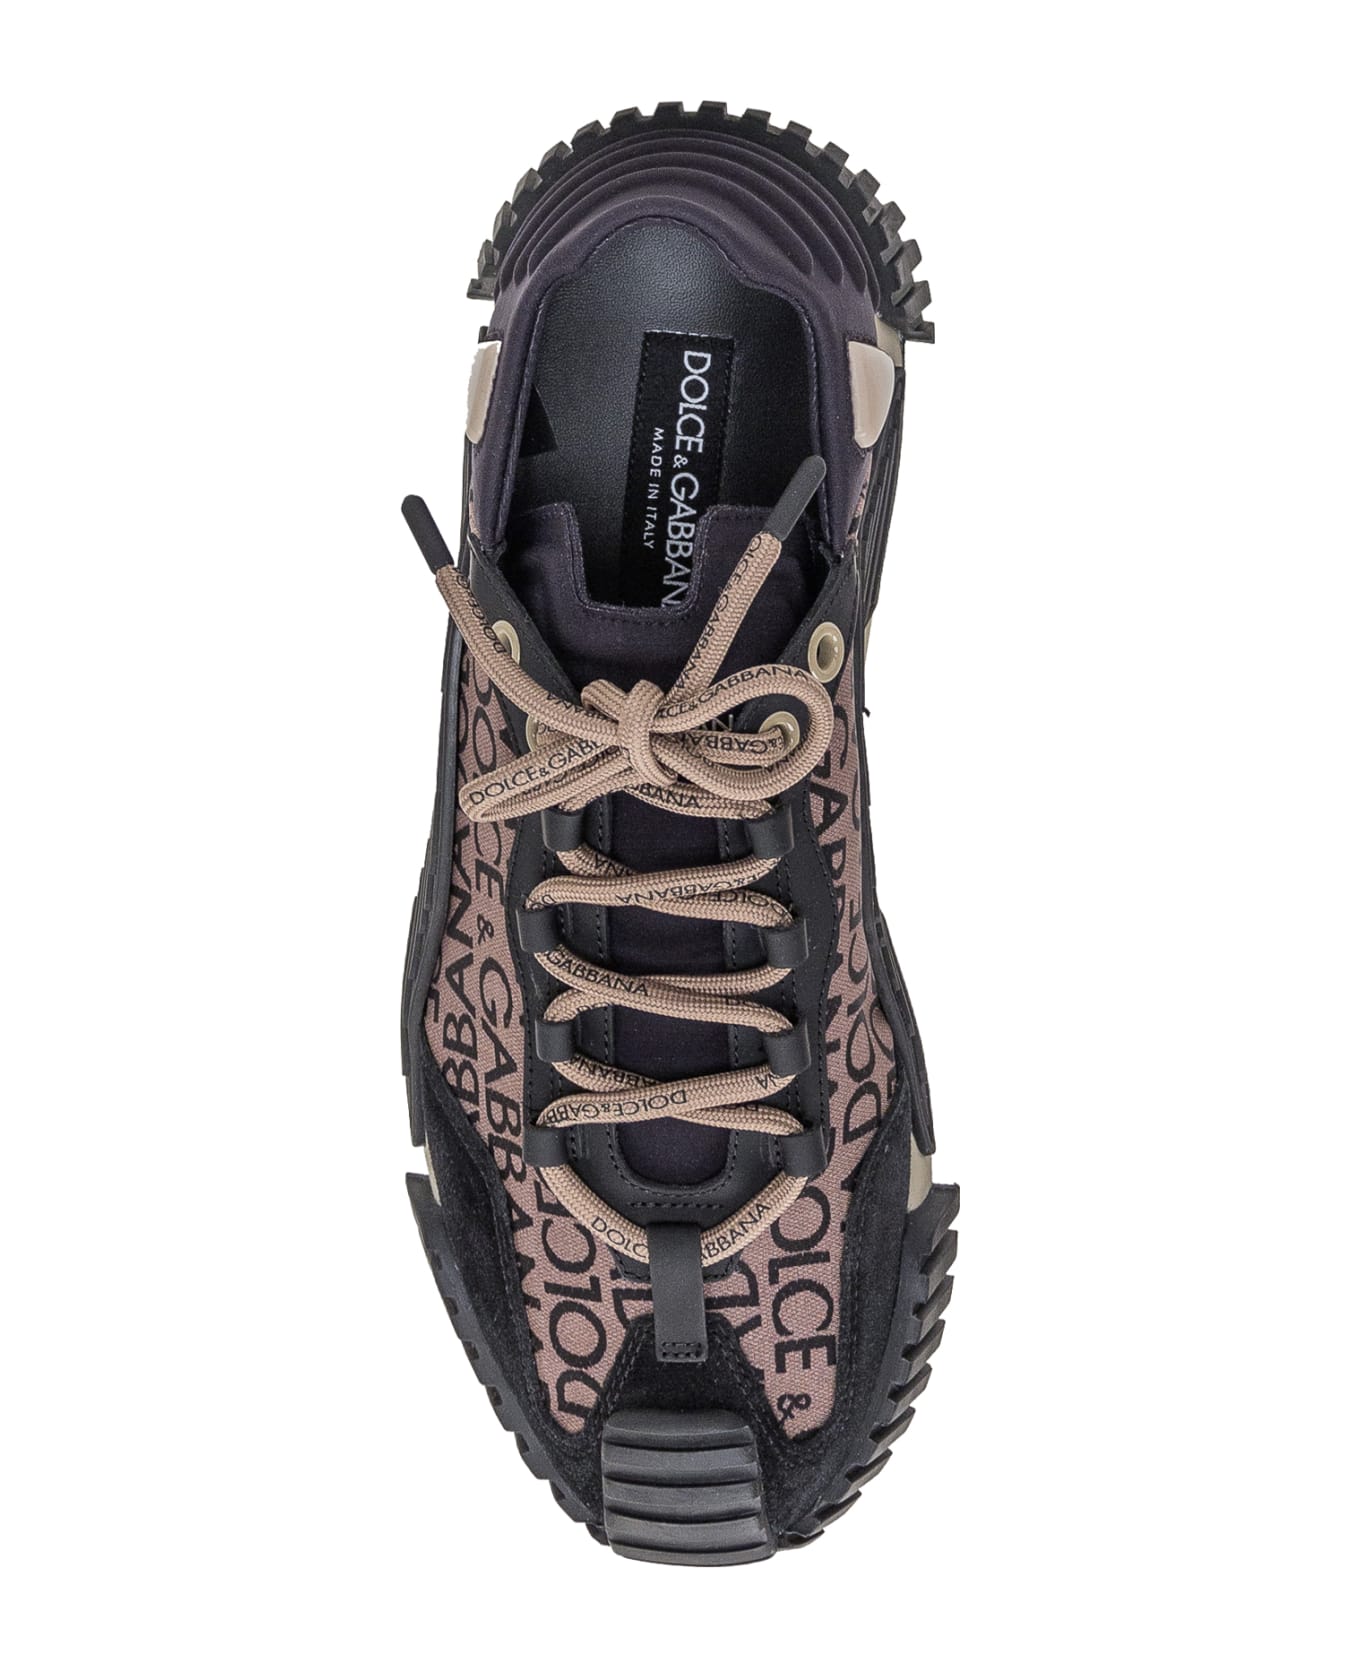 Dolce & Gabbana Ns1 Sneaker - DG MORO FDO BEIGE スニーカー